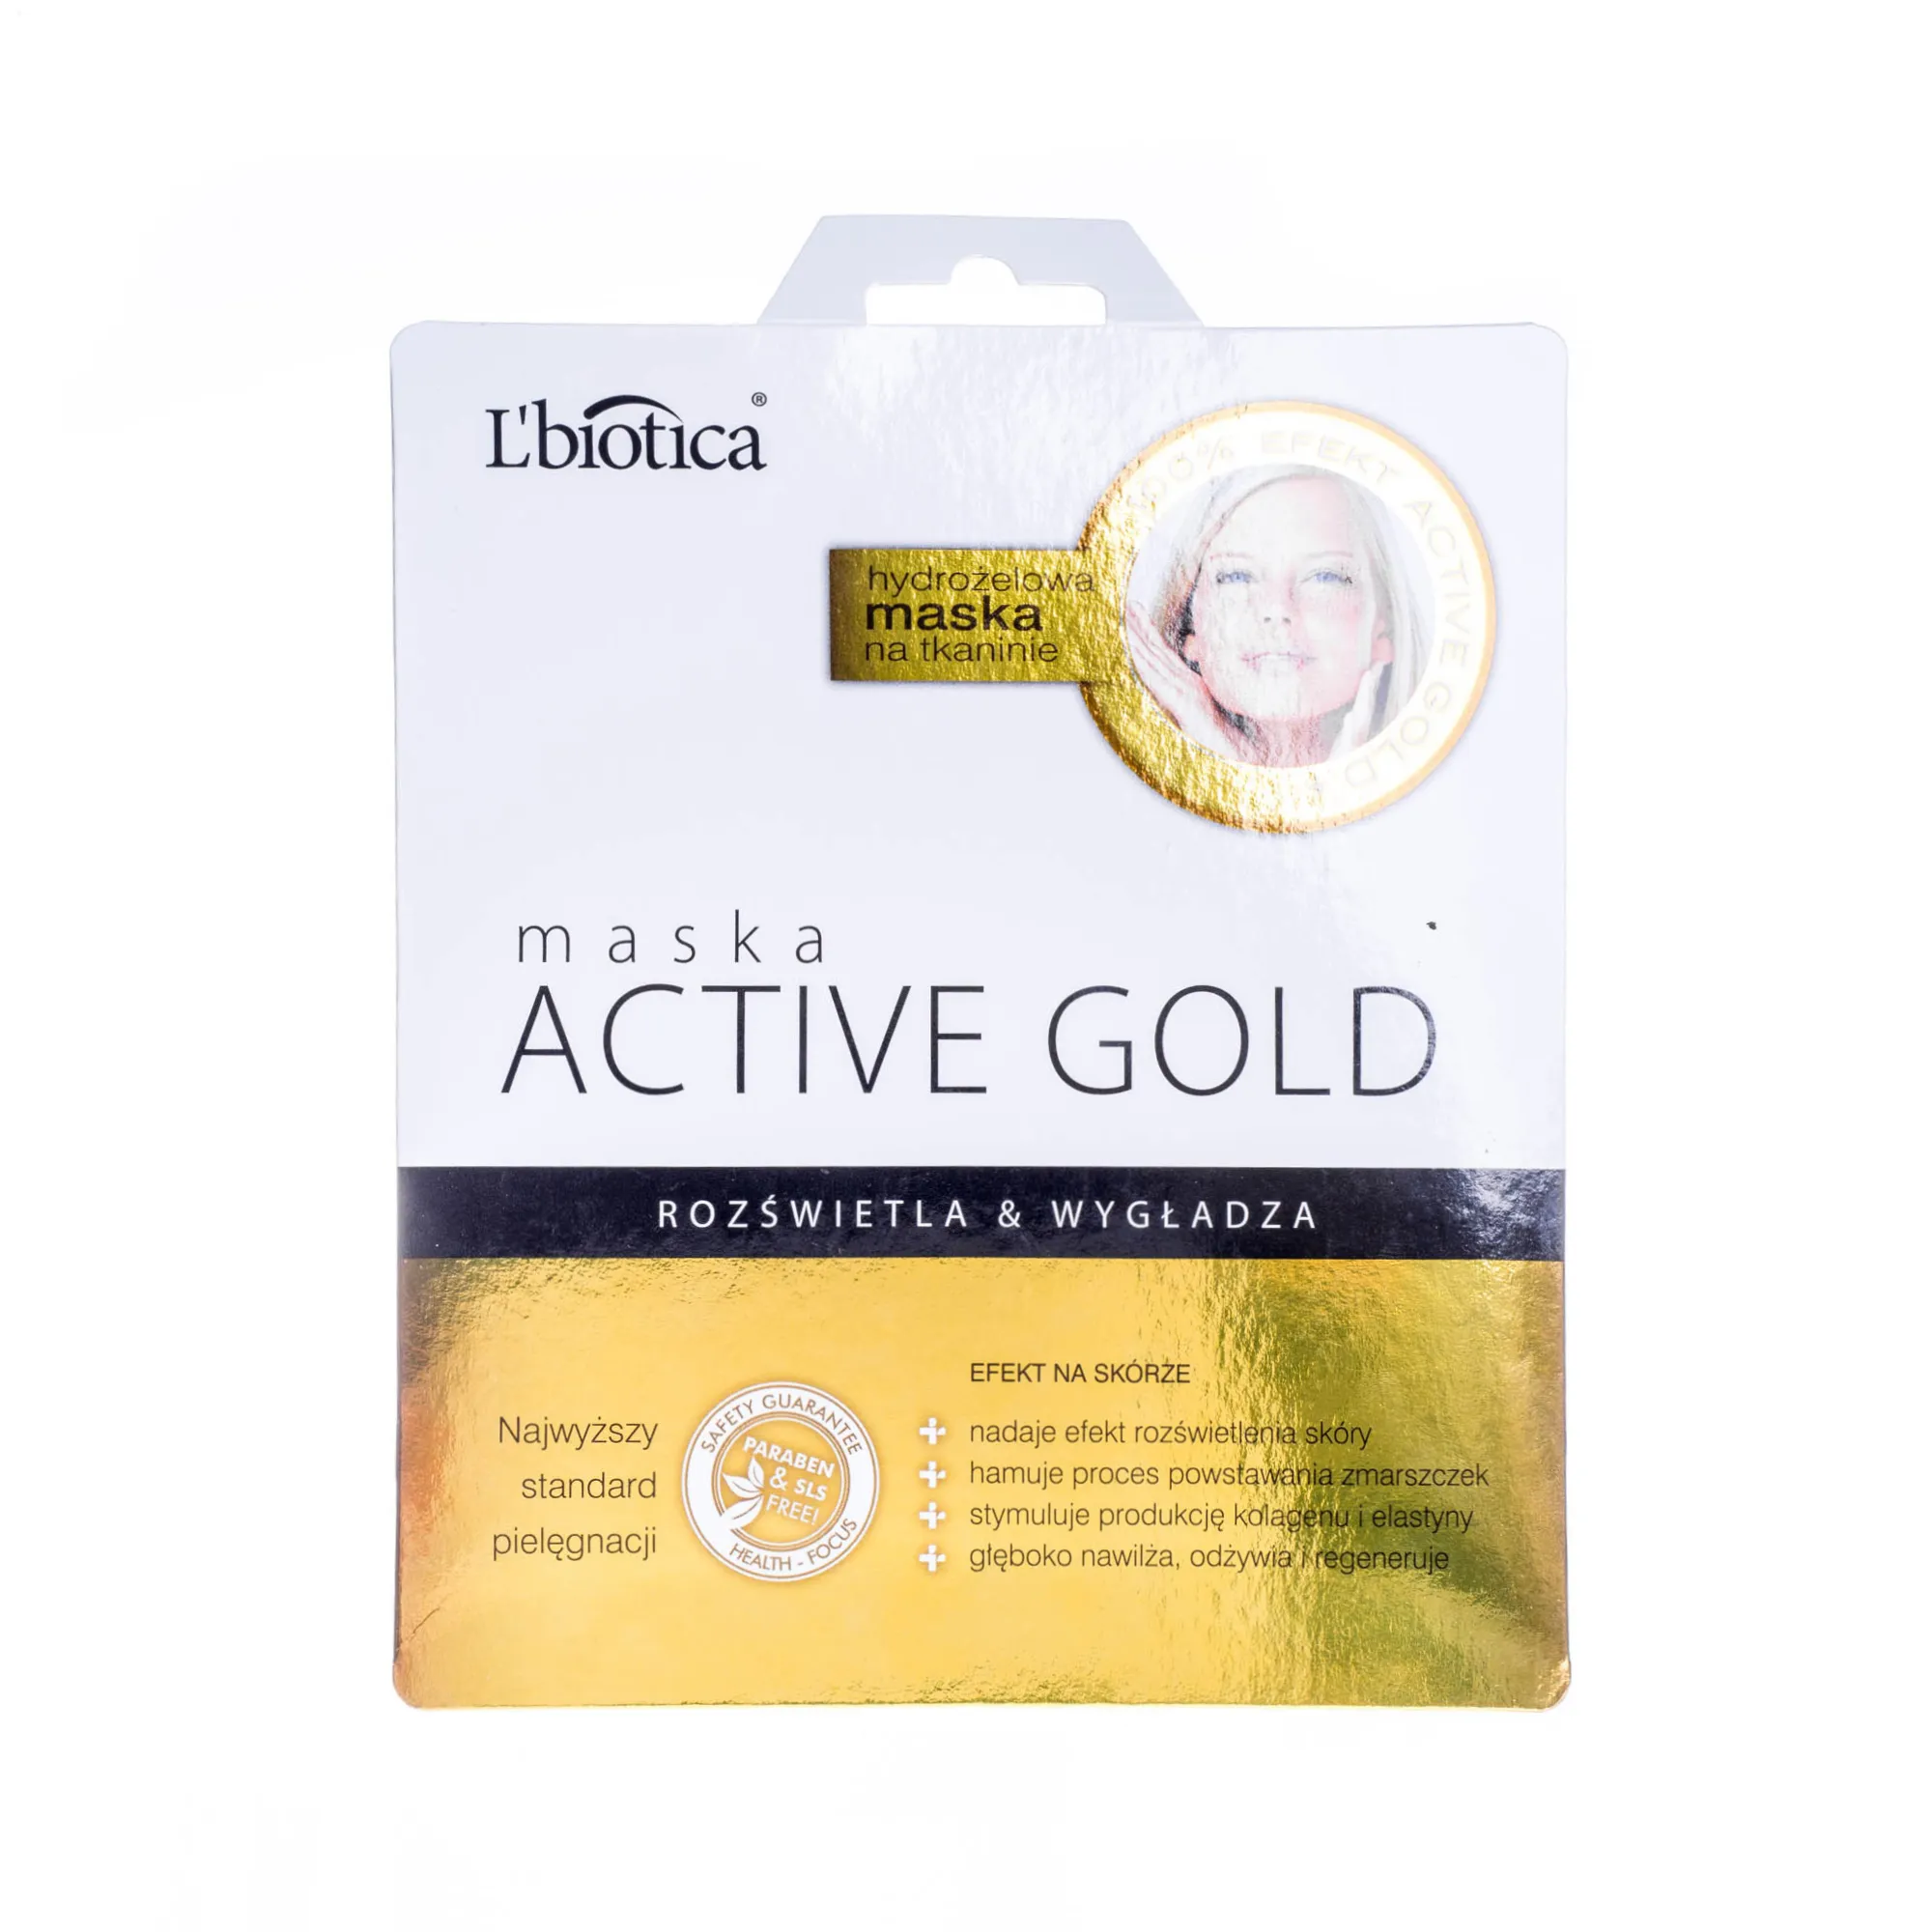 L'biotica, maska hydrożelowa Active Gold na tkaninie, 25 g